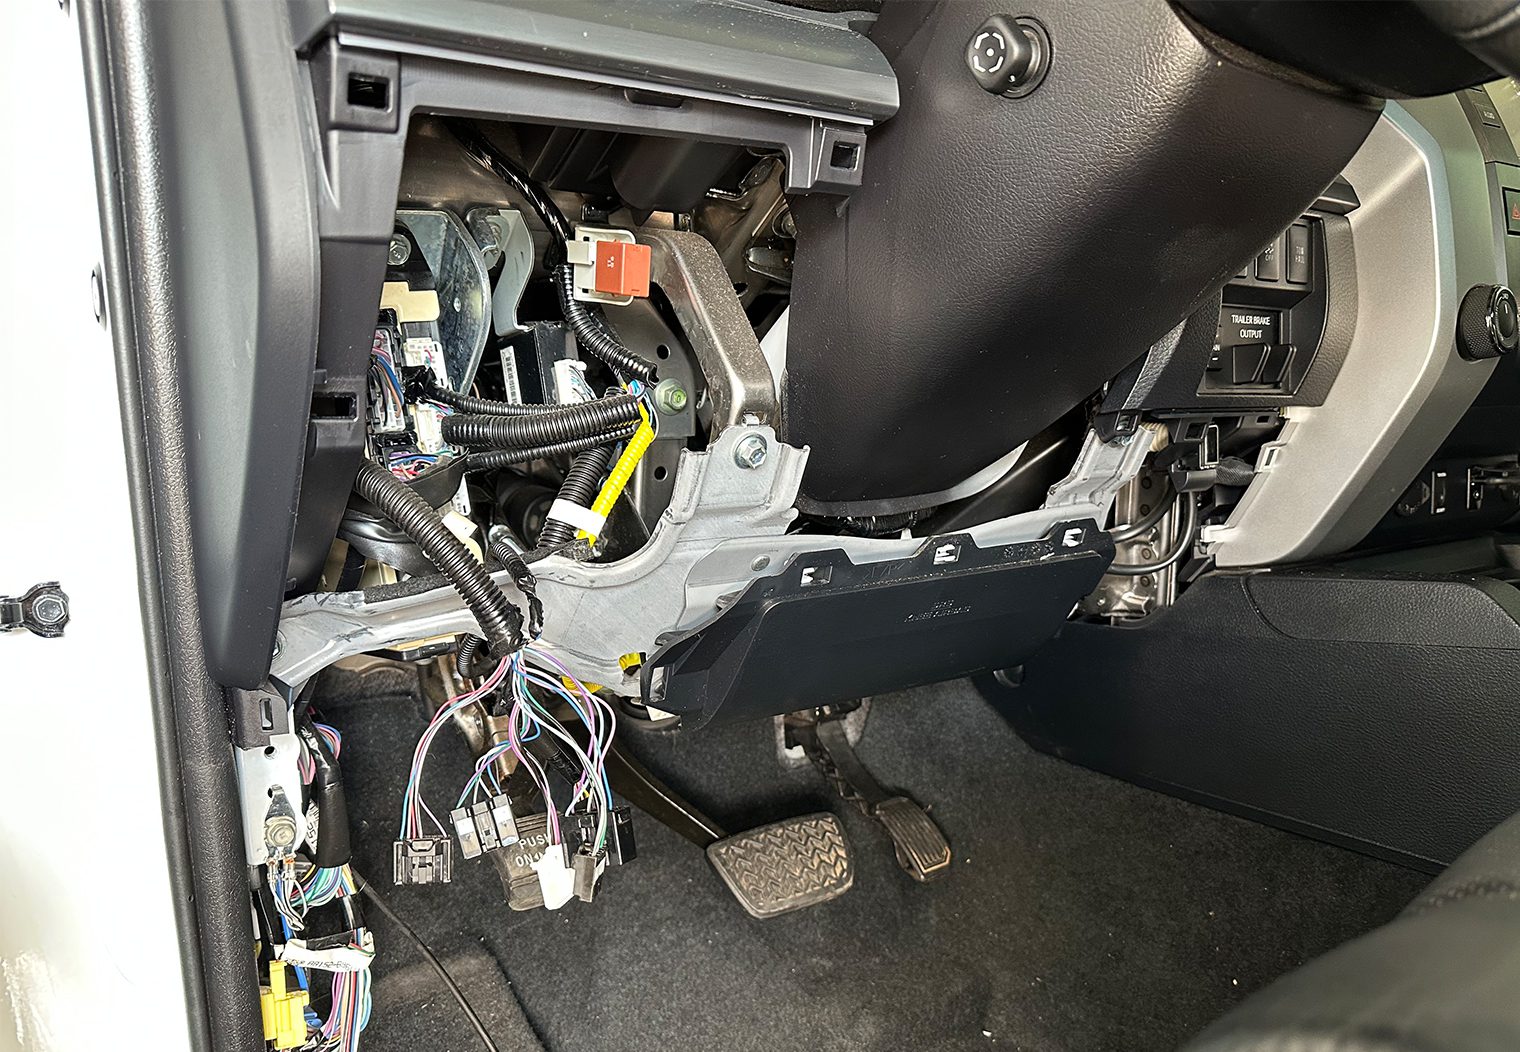 Toyota Tundra dash panel removed